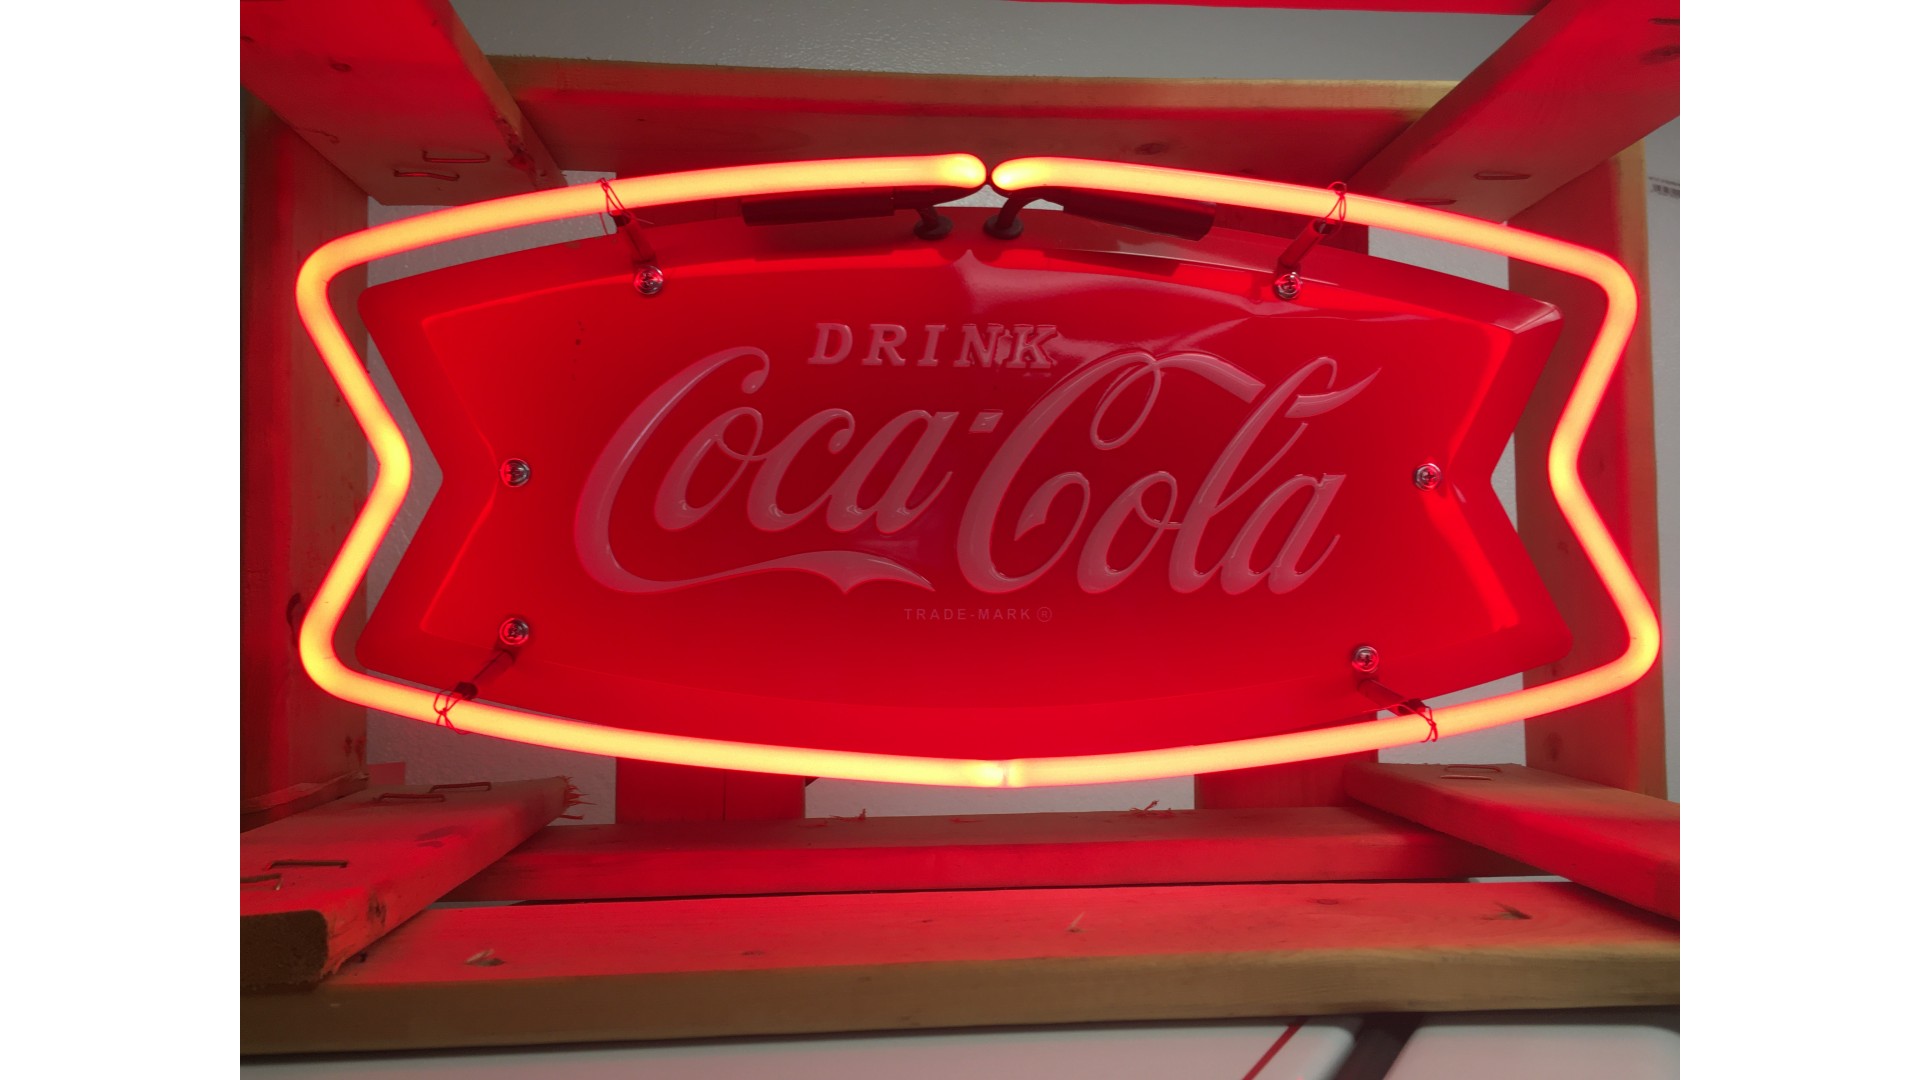 Coca Cola Neon